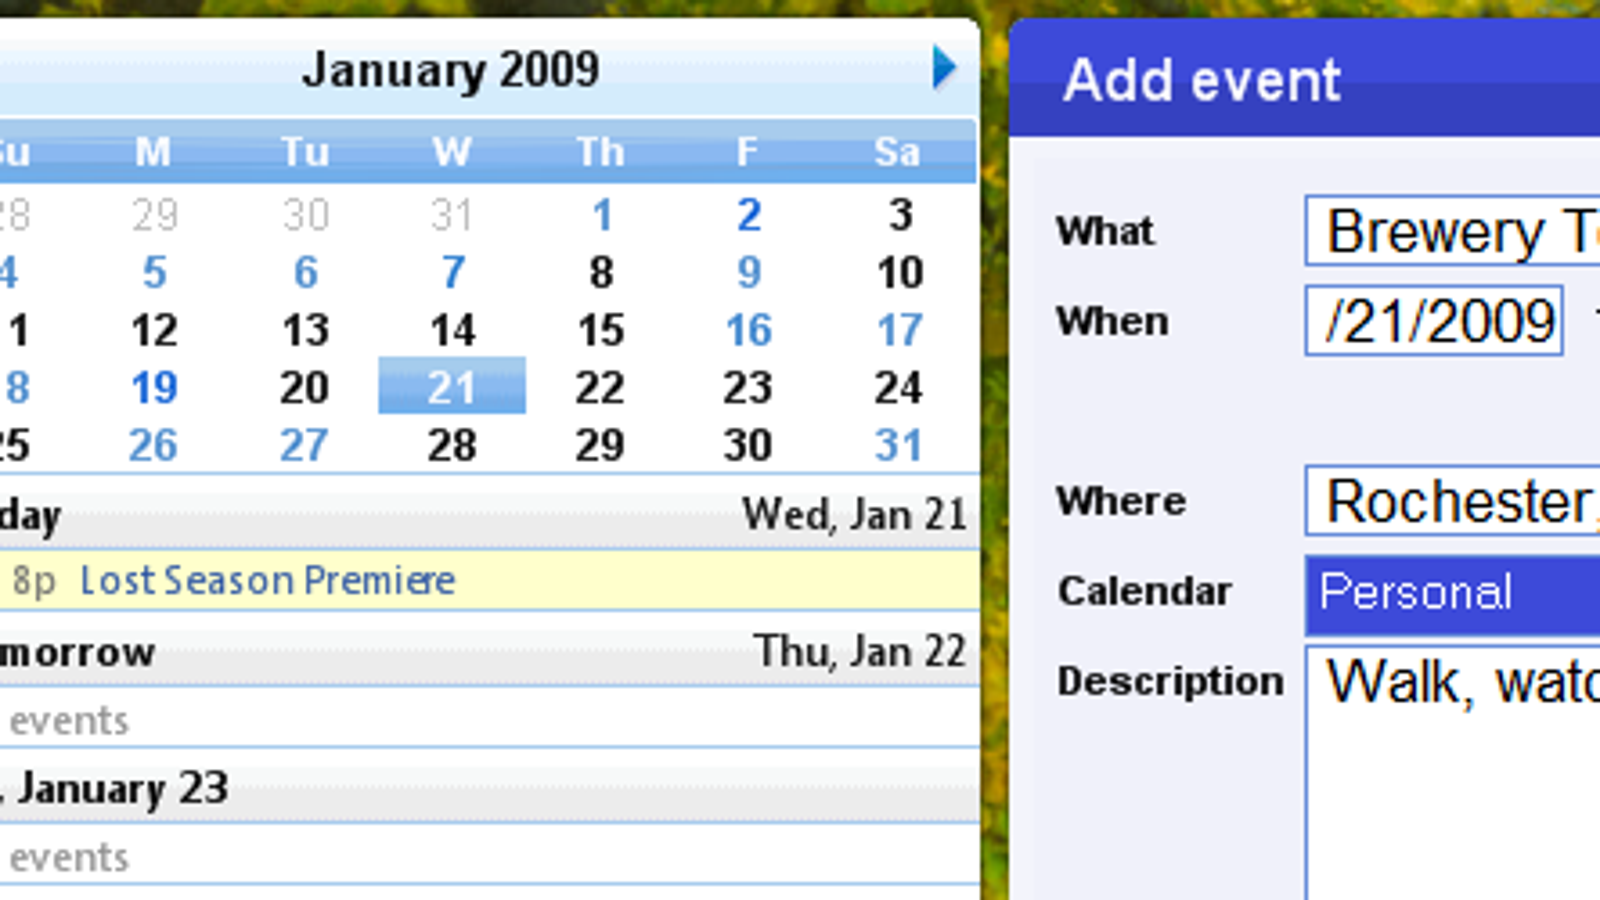 download windows 10 google calendar app